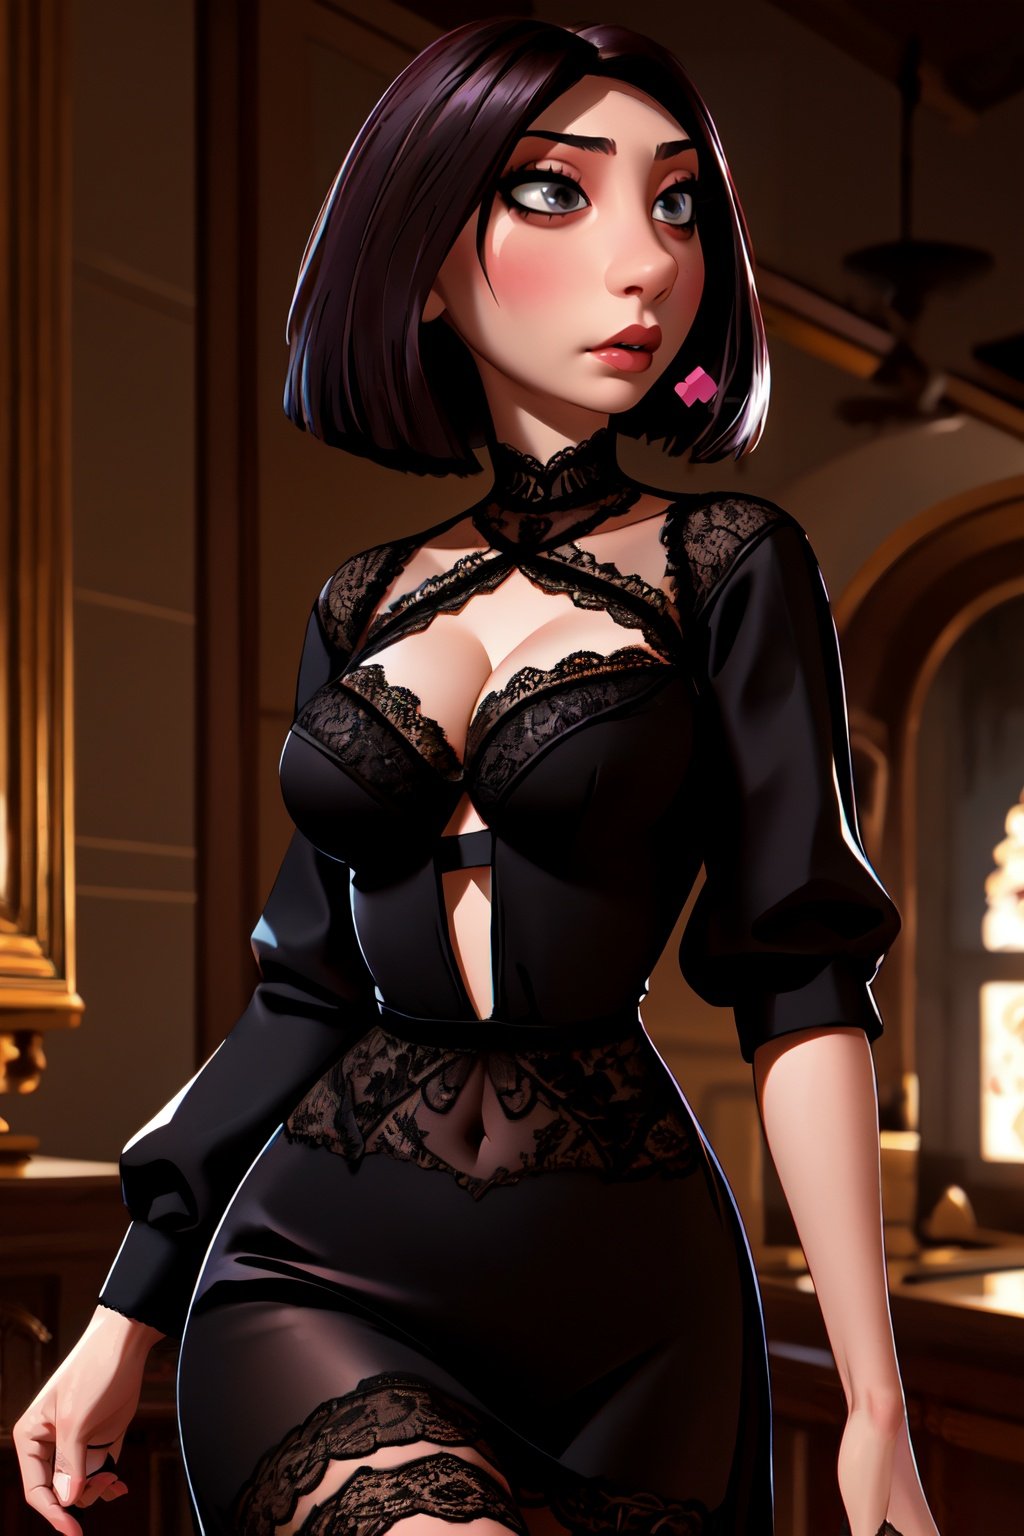 <lora:colettetatou-07:0.8> ,colettetatou , (masterpiece, high quality,:1.2)   woman , (black lace lingerie:1.3),   large breasts,  cleavage,  evocative pose, dynamic pose, 